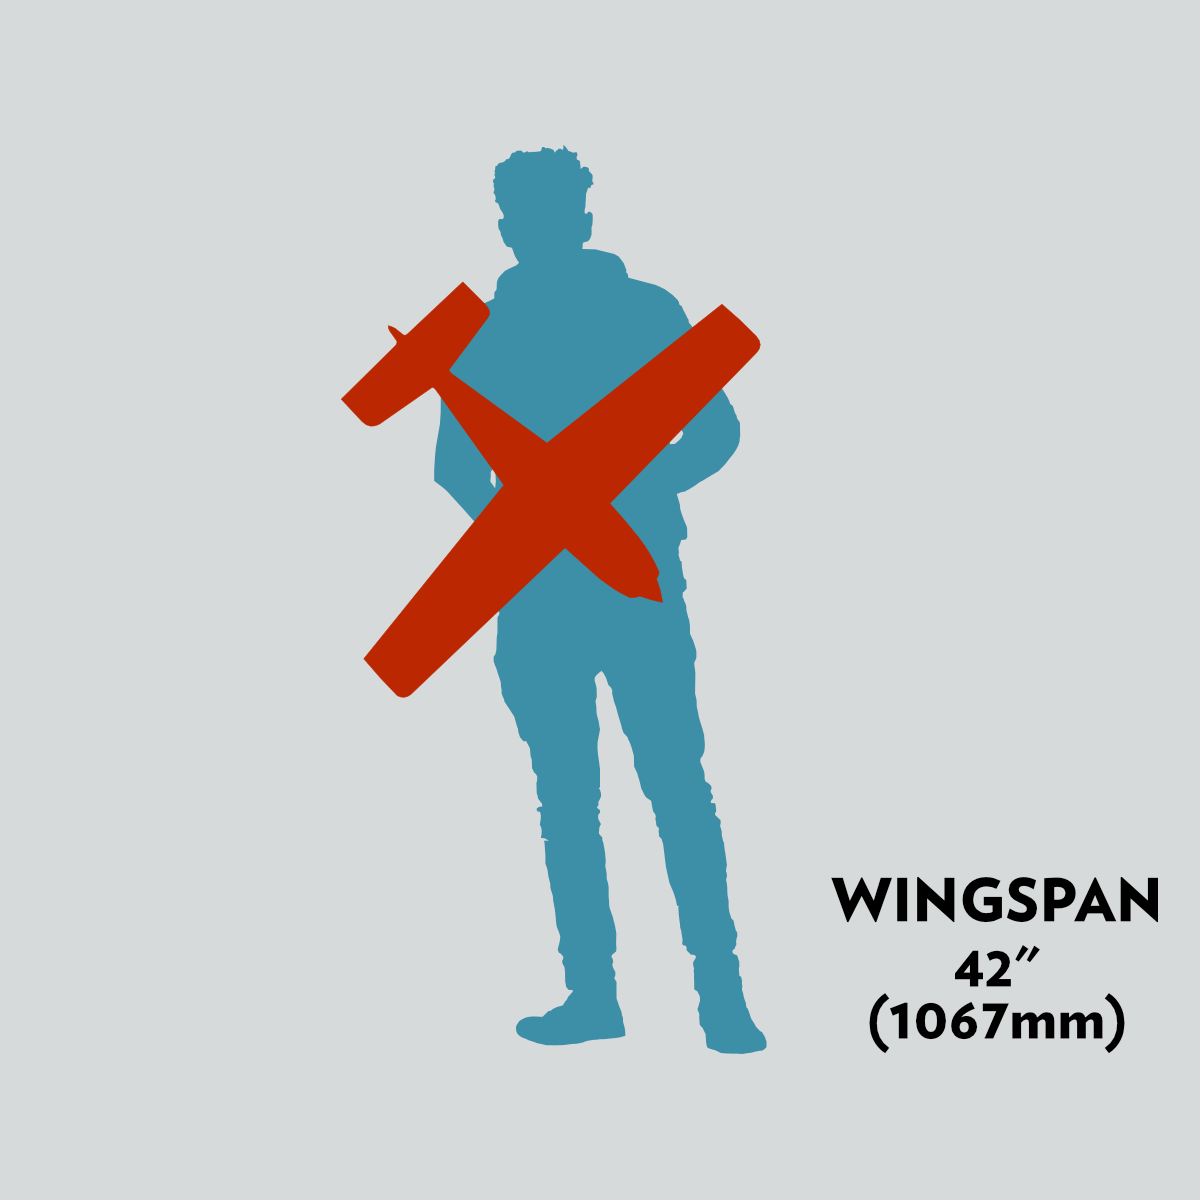 42" (1047mm) Wingspan